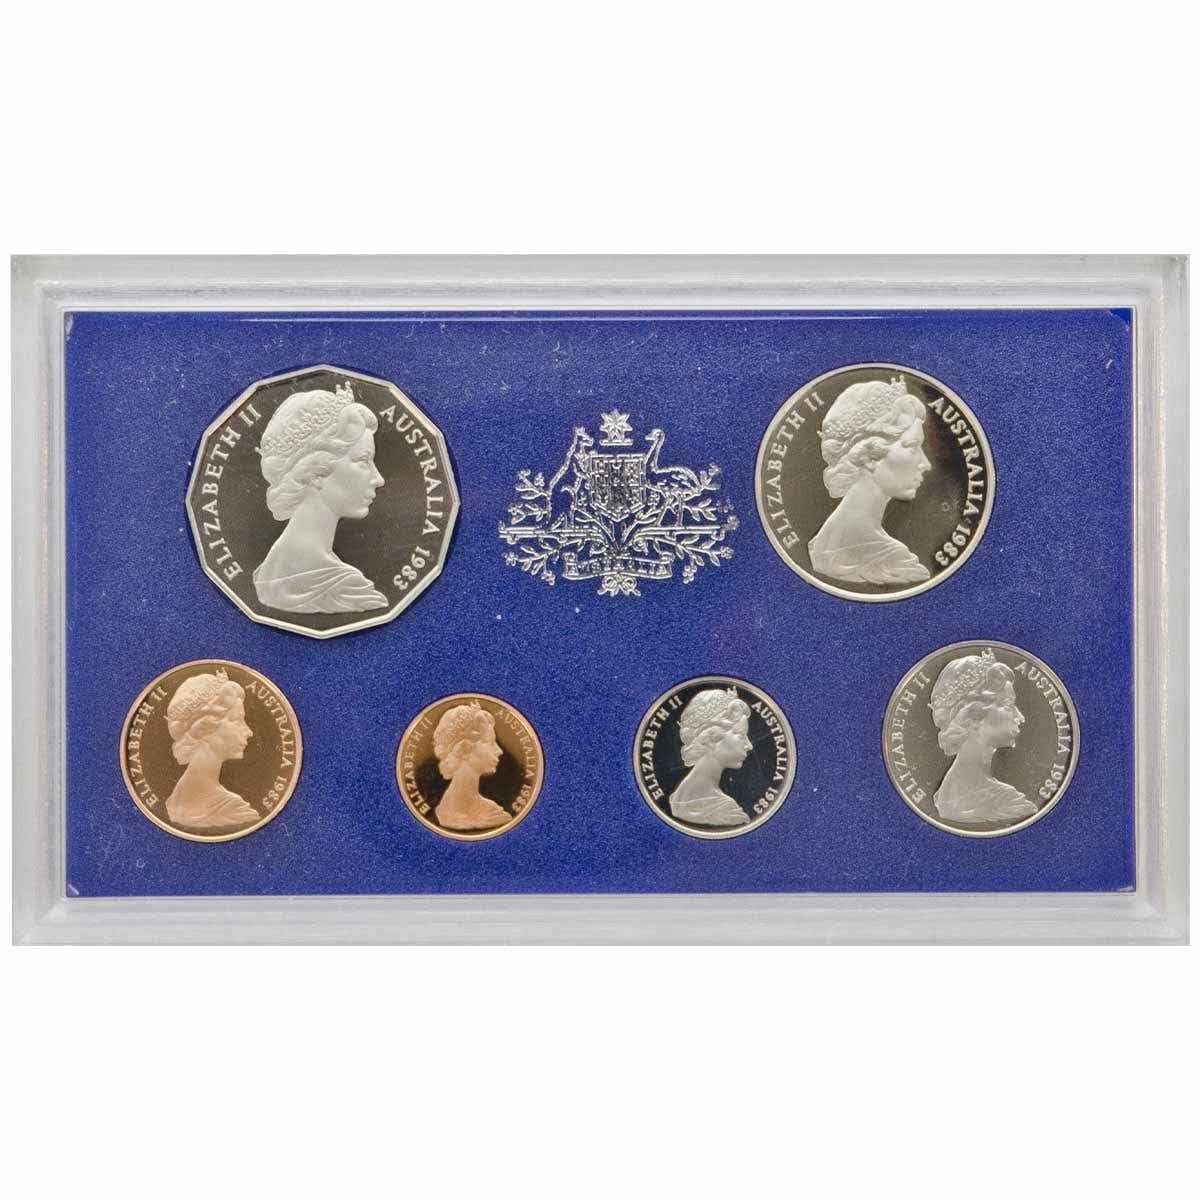 Australia 1983 6-Coin Proof Set